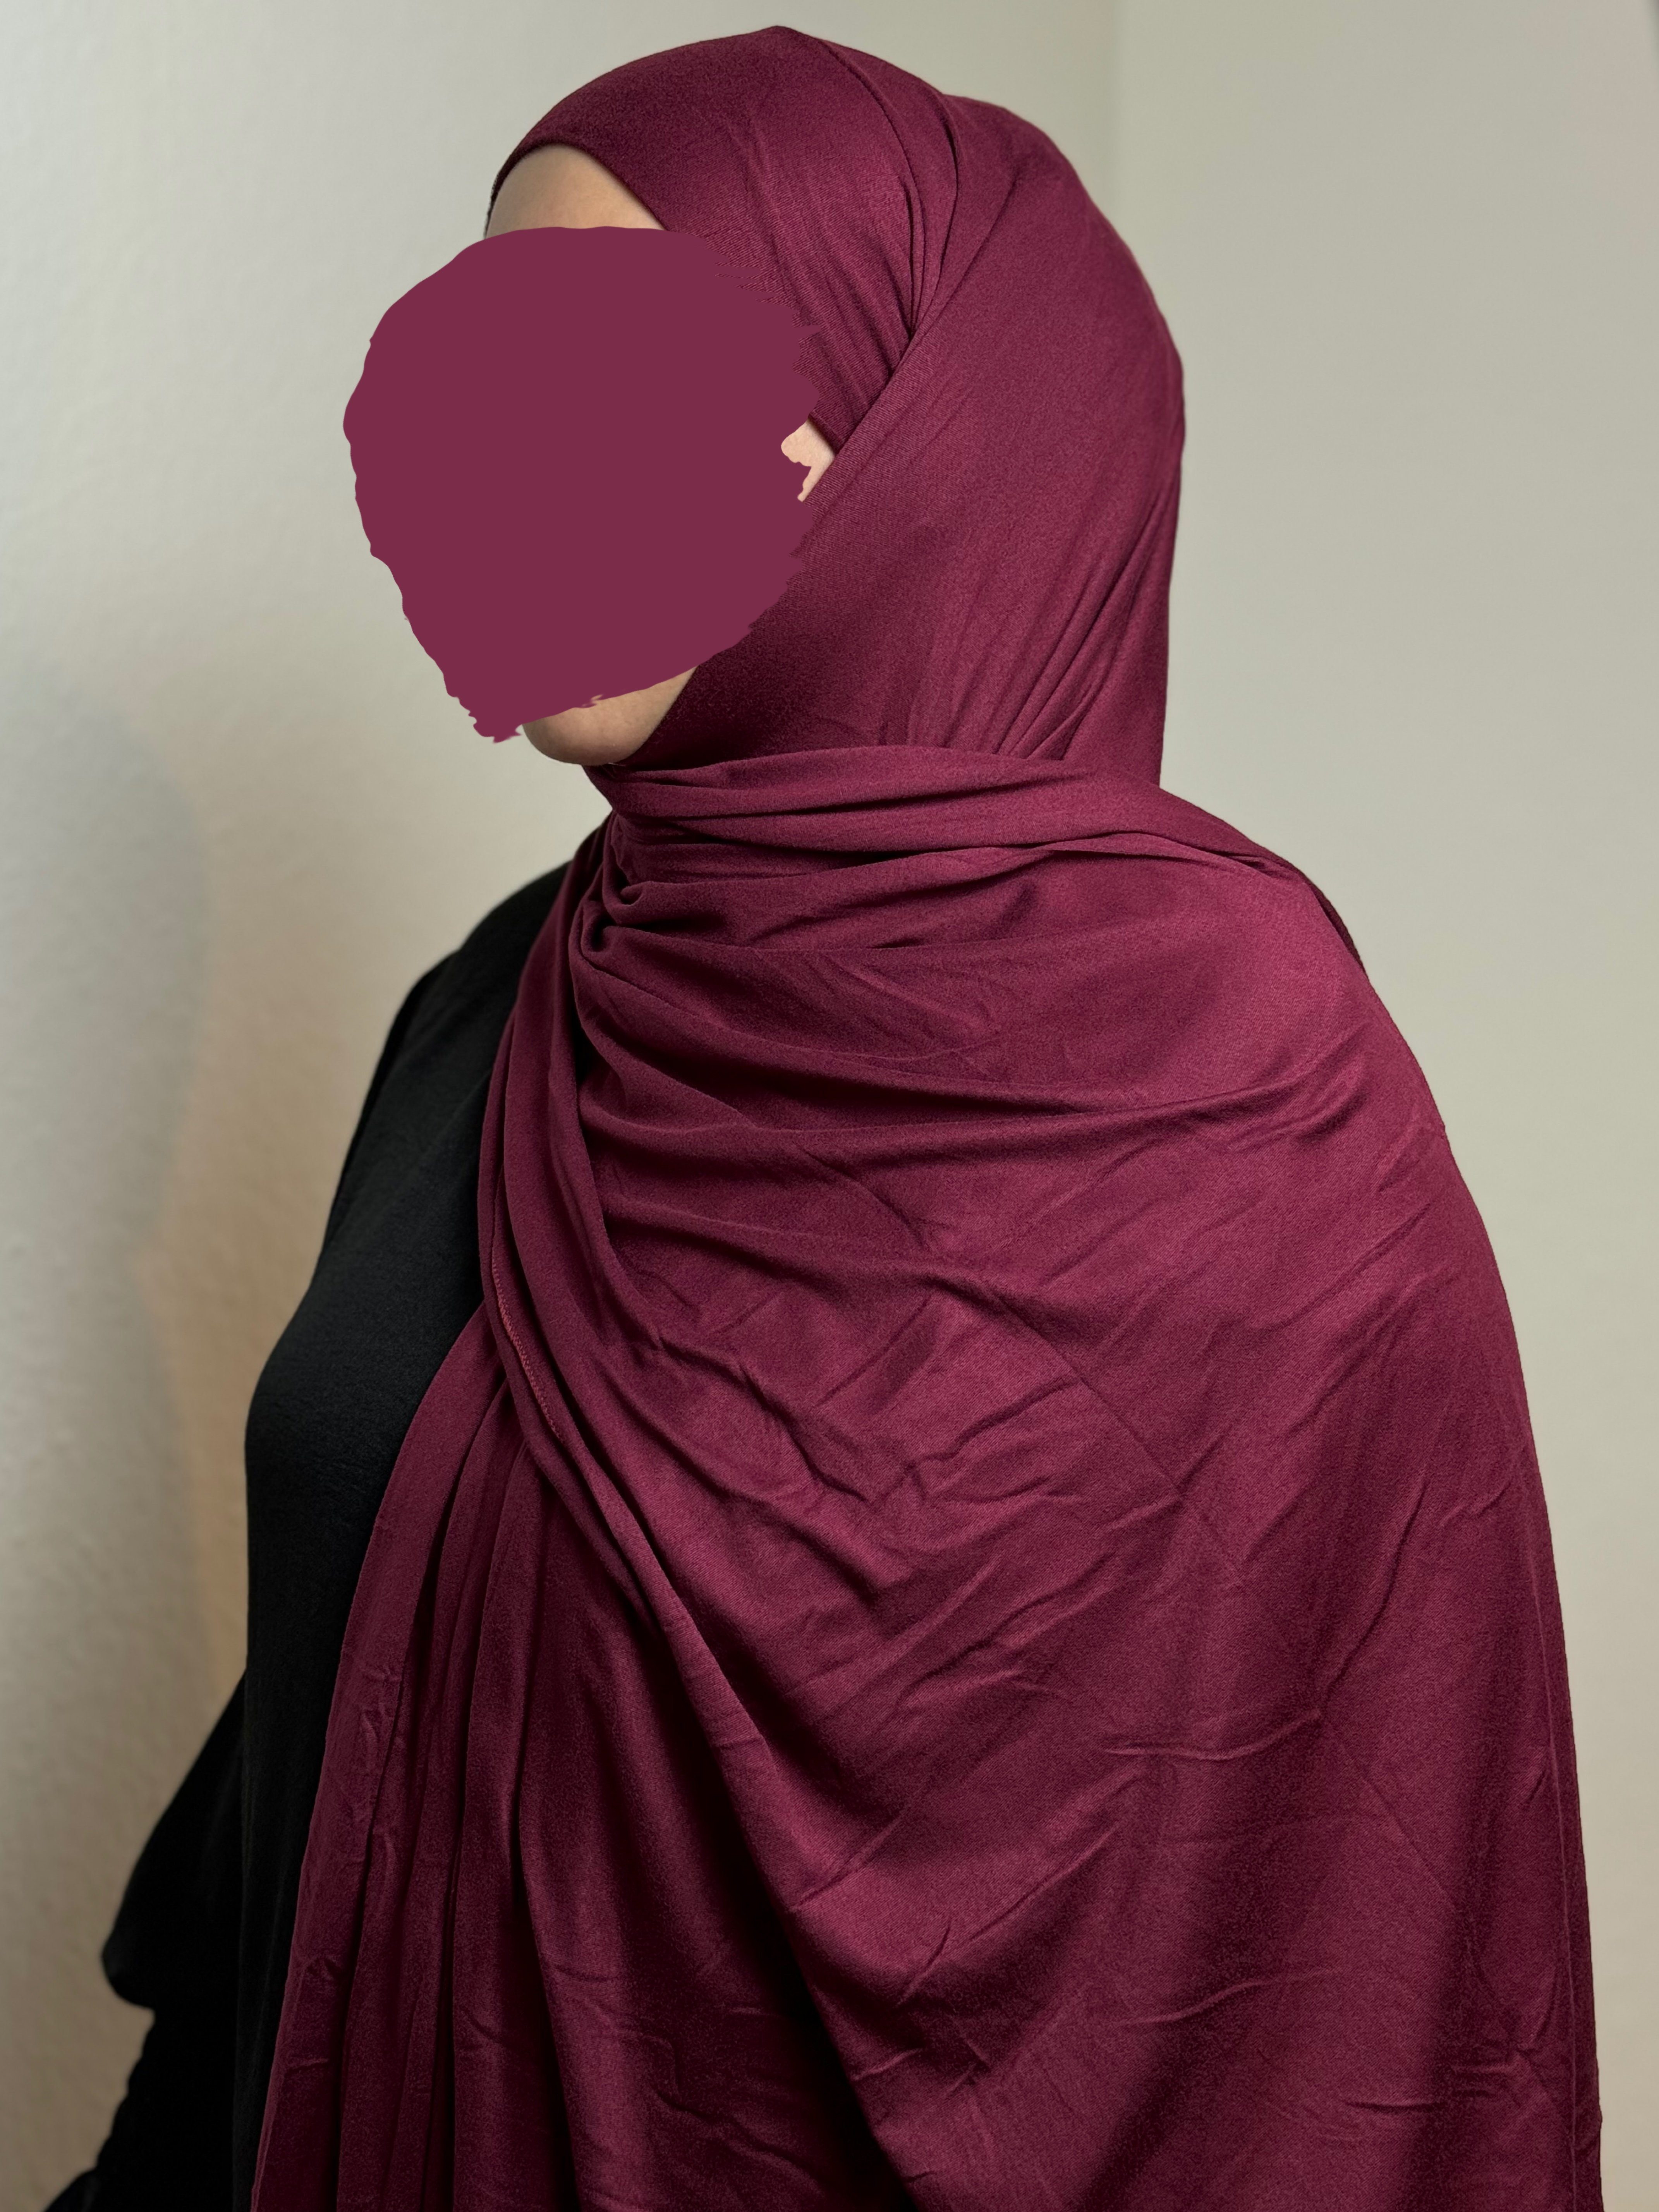 HIJABIFY Hijab Easy integrierter Hijab/ Hijab 2 in Bordeauxrot (antirutsch) Hidschab/ Jersey-Stoff Tuch Kopftuch mit unter 1